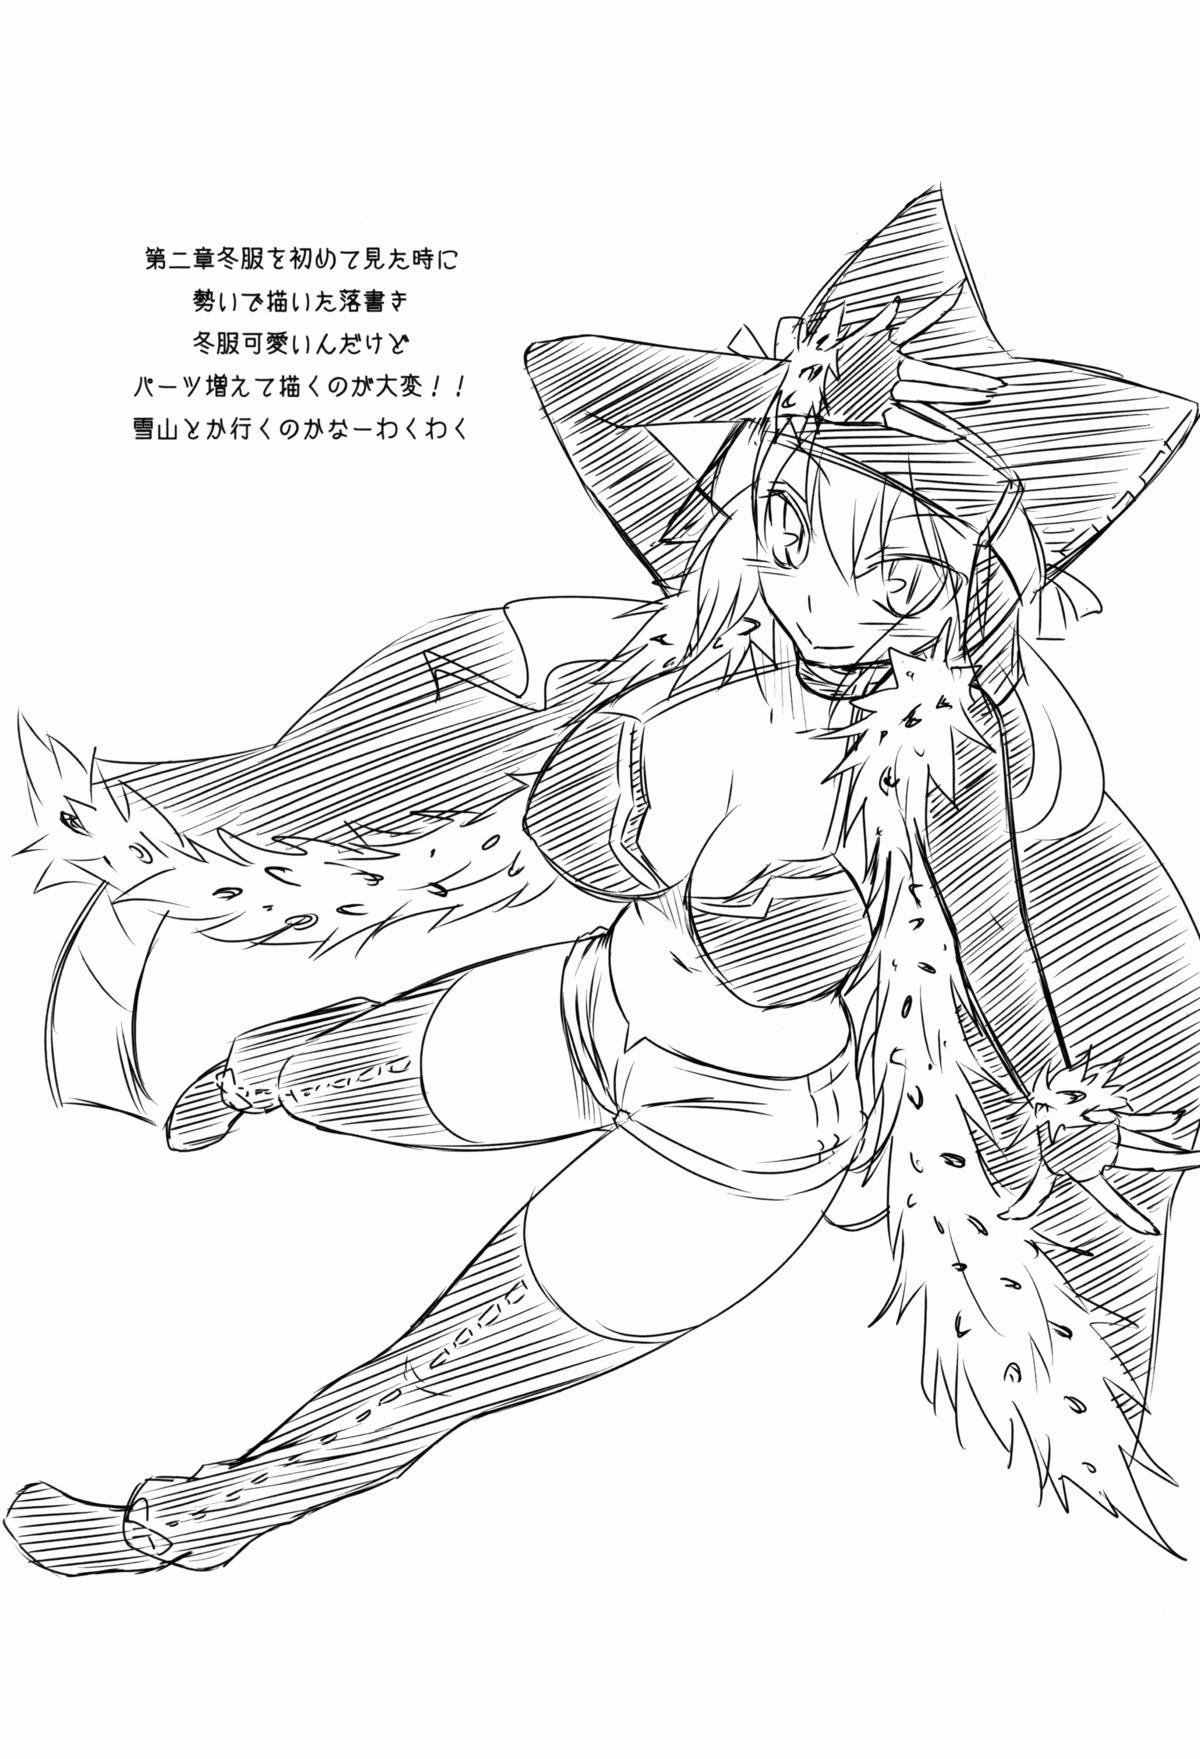 Xxx pussycats - League of legends Kaiten mutenmaru Reversecowgirl - Page 6